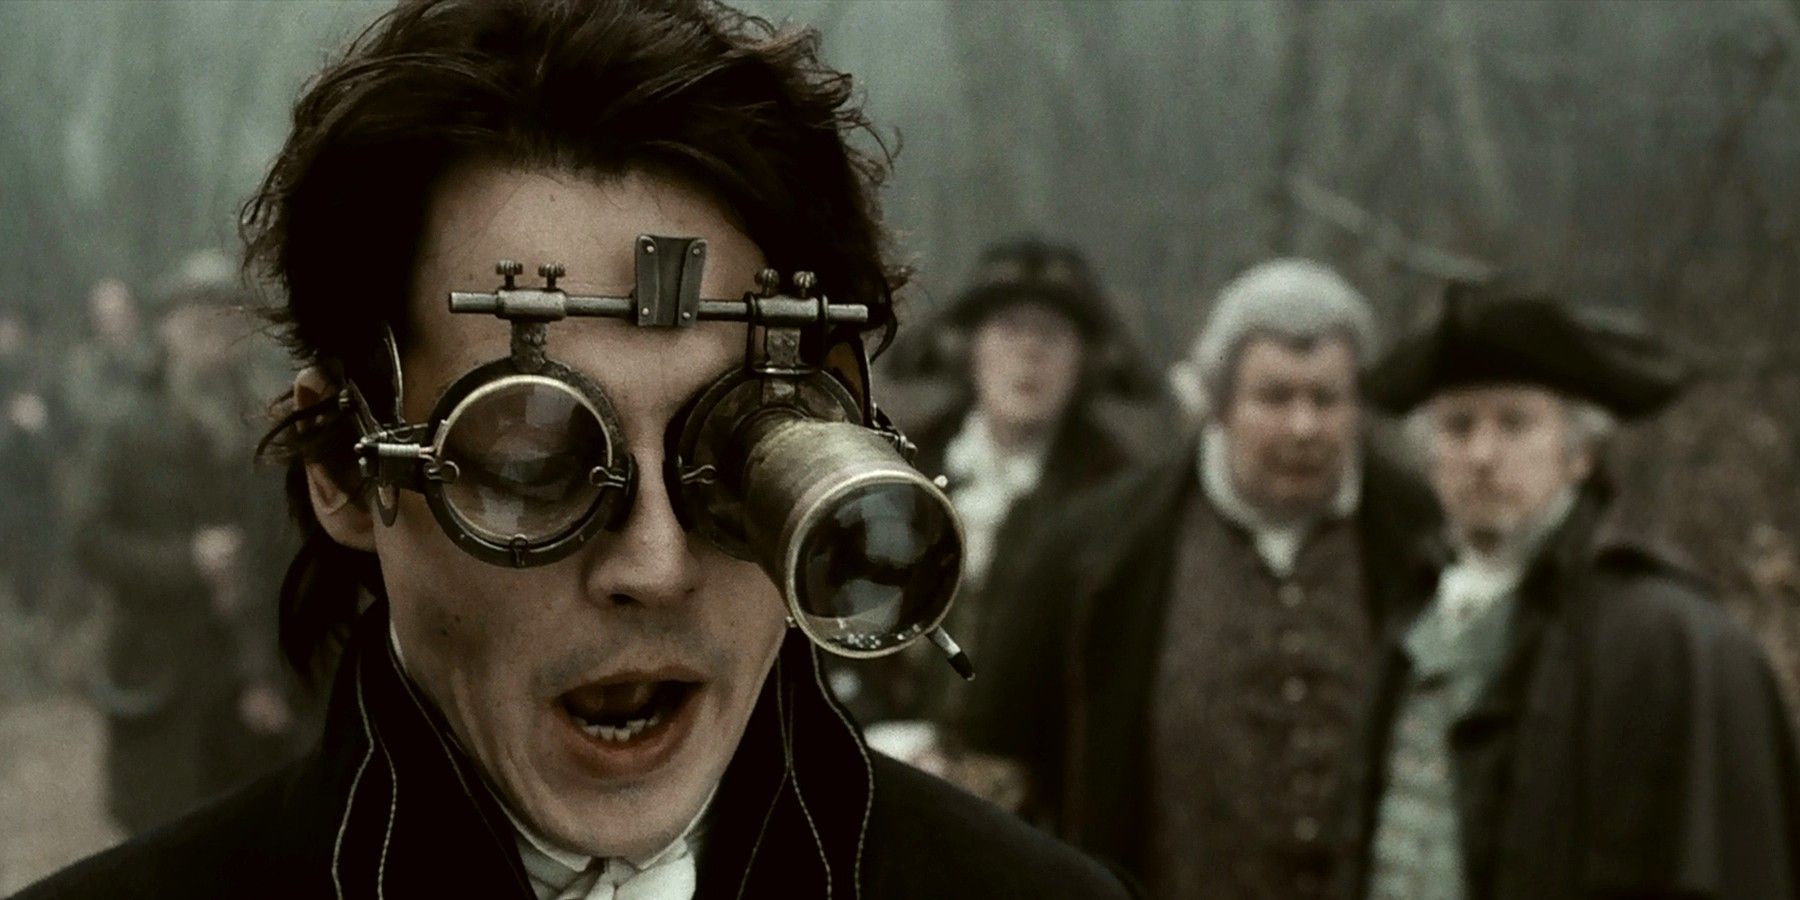 Johnny Depp investigates the crime scene as Ichabod Crane in Sleepy Hollow